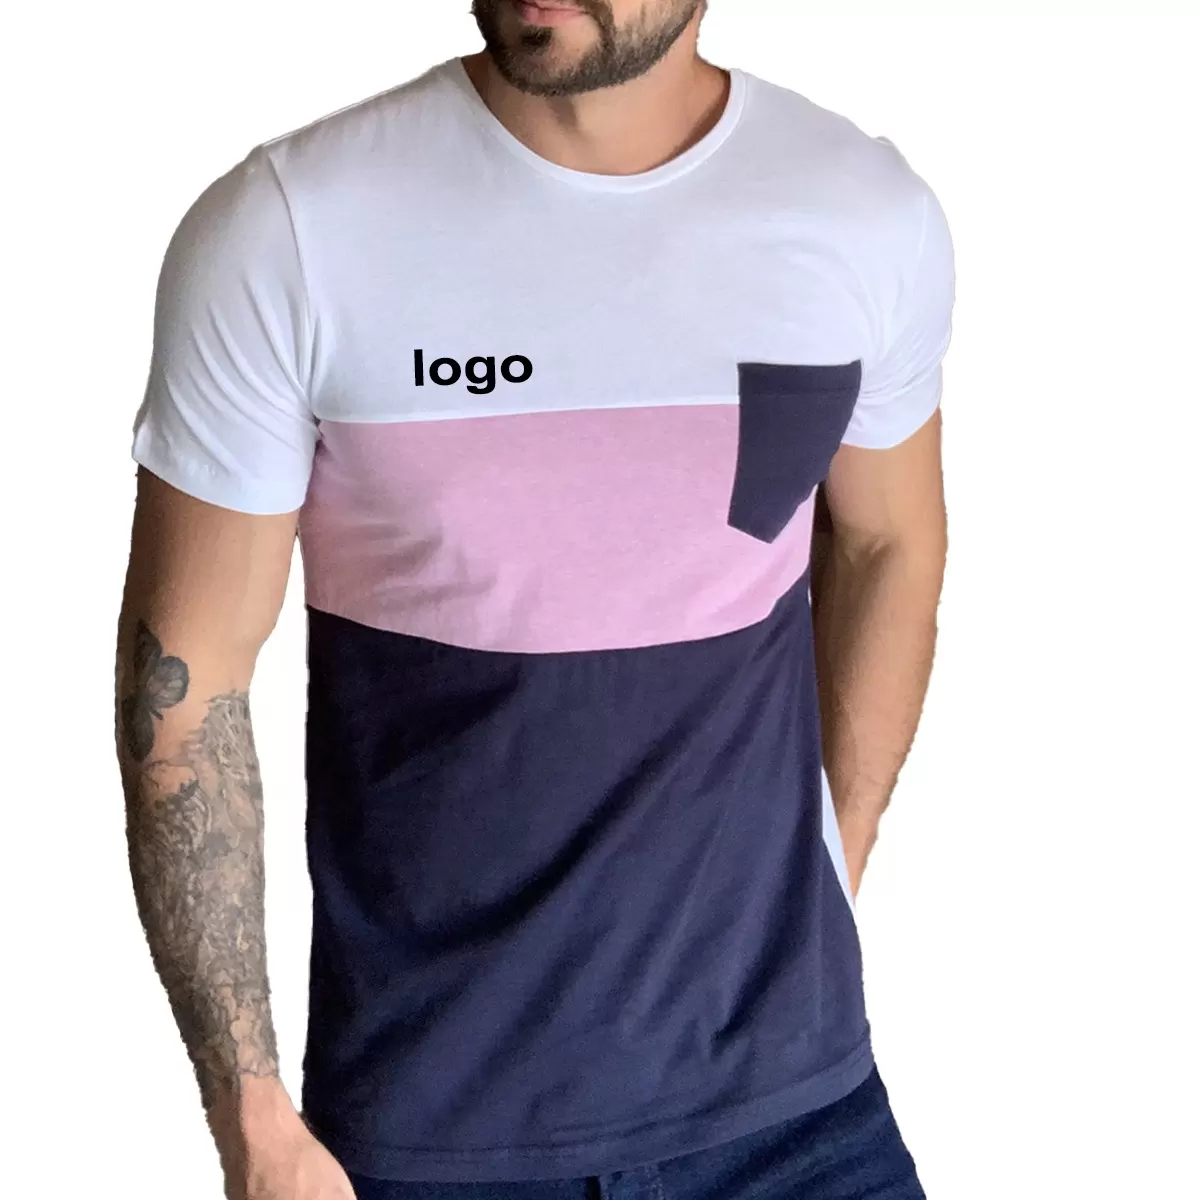 Design T-shirts Supplier in Chula Vista